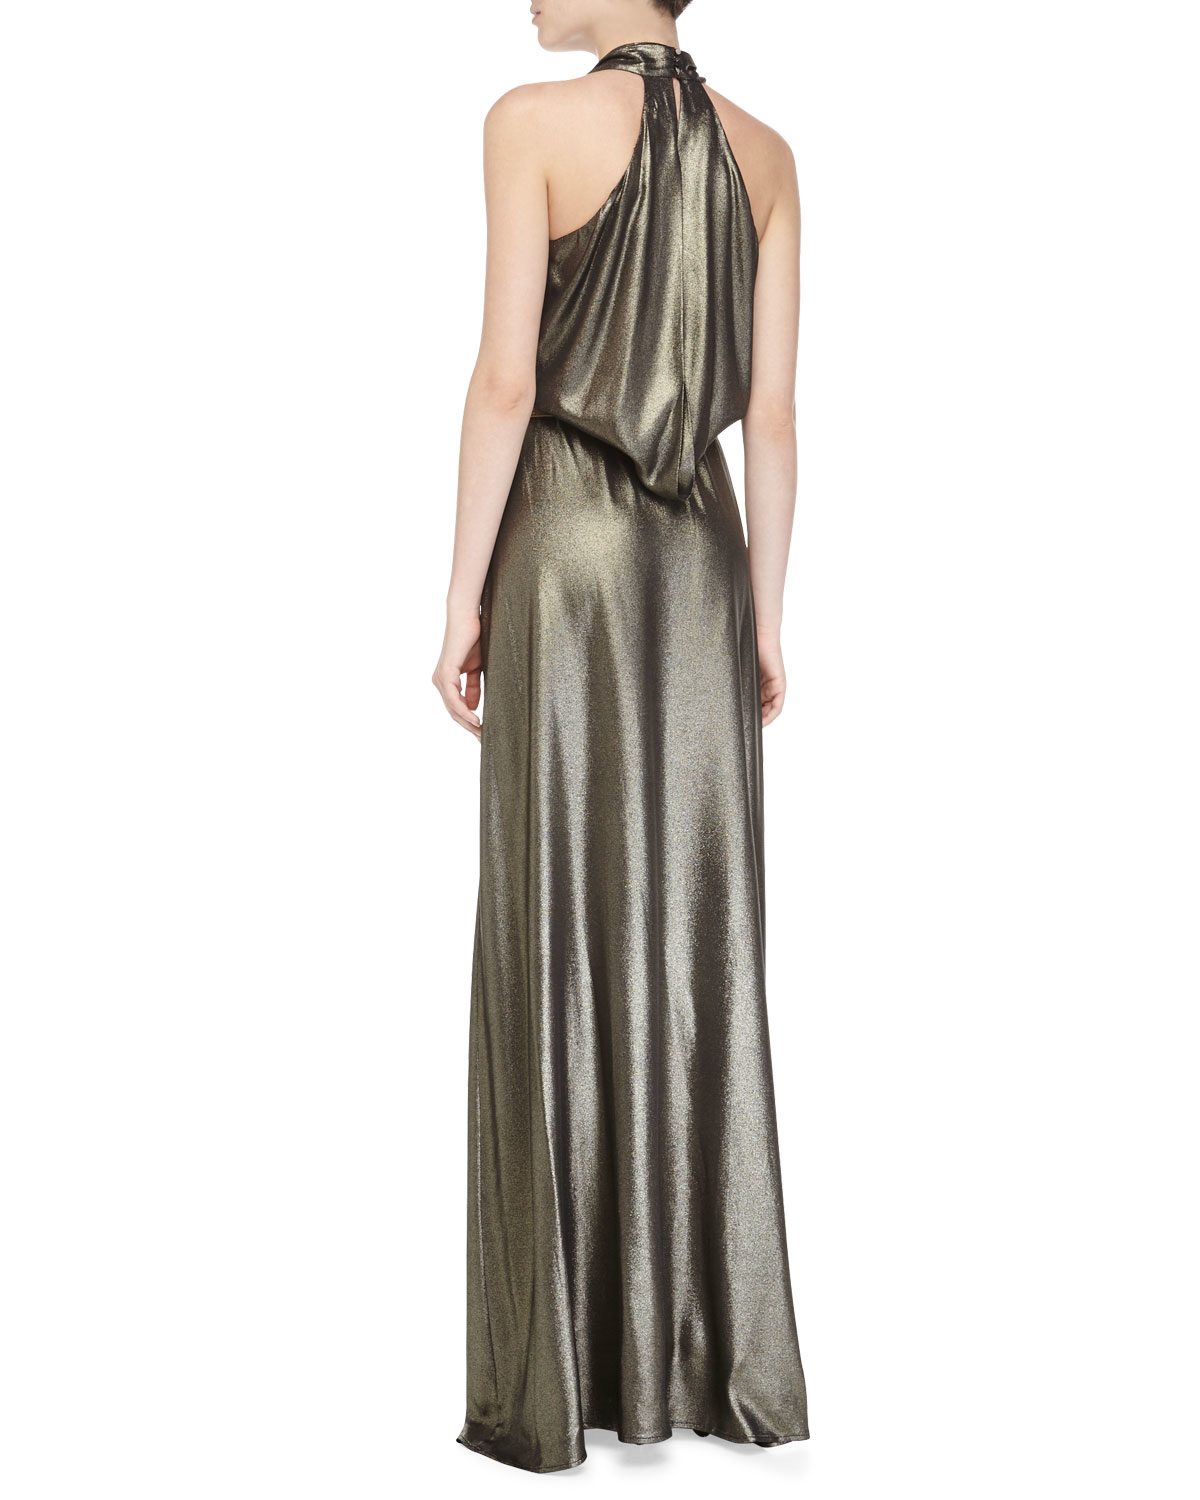 Lyst - Nicole Miller Sleeveless Metallic Evening Gown in Metallic